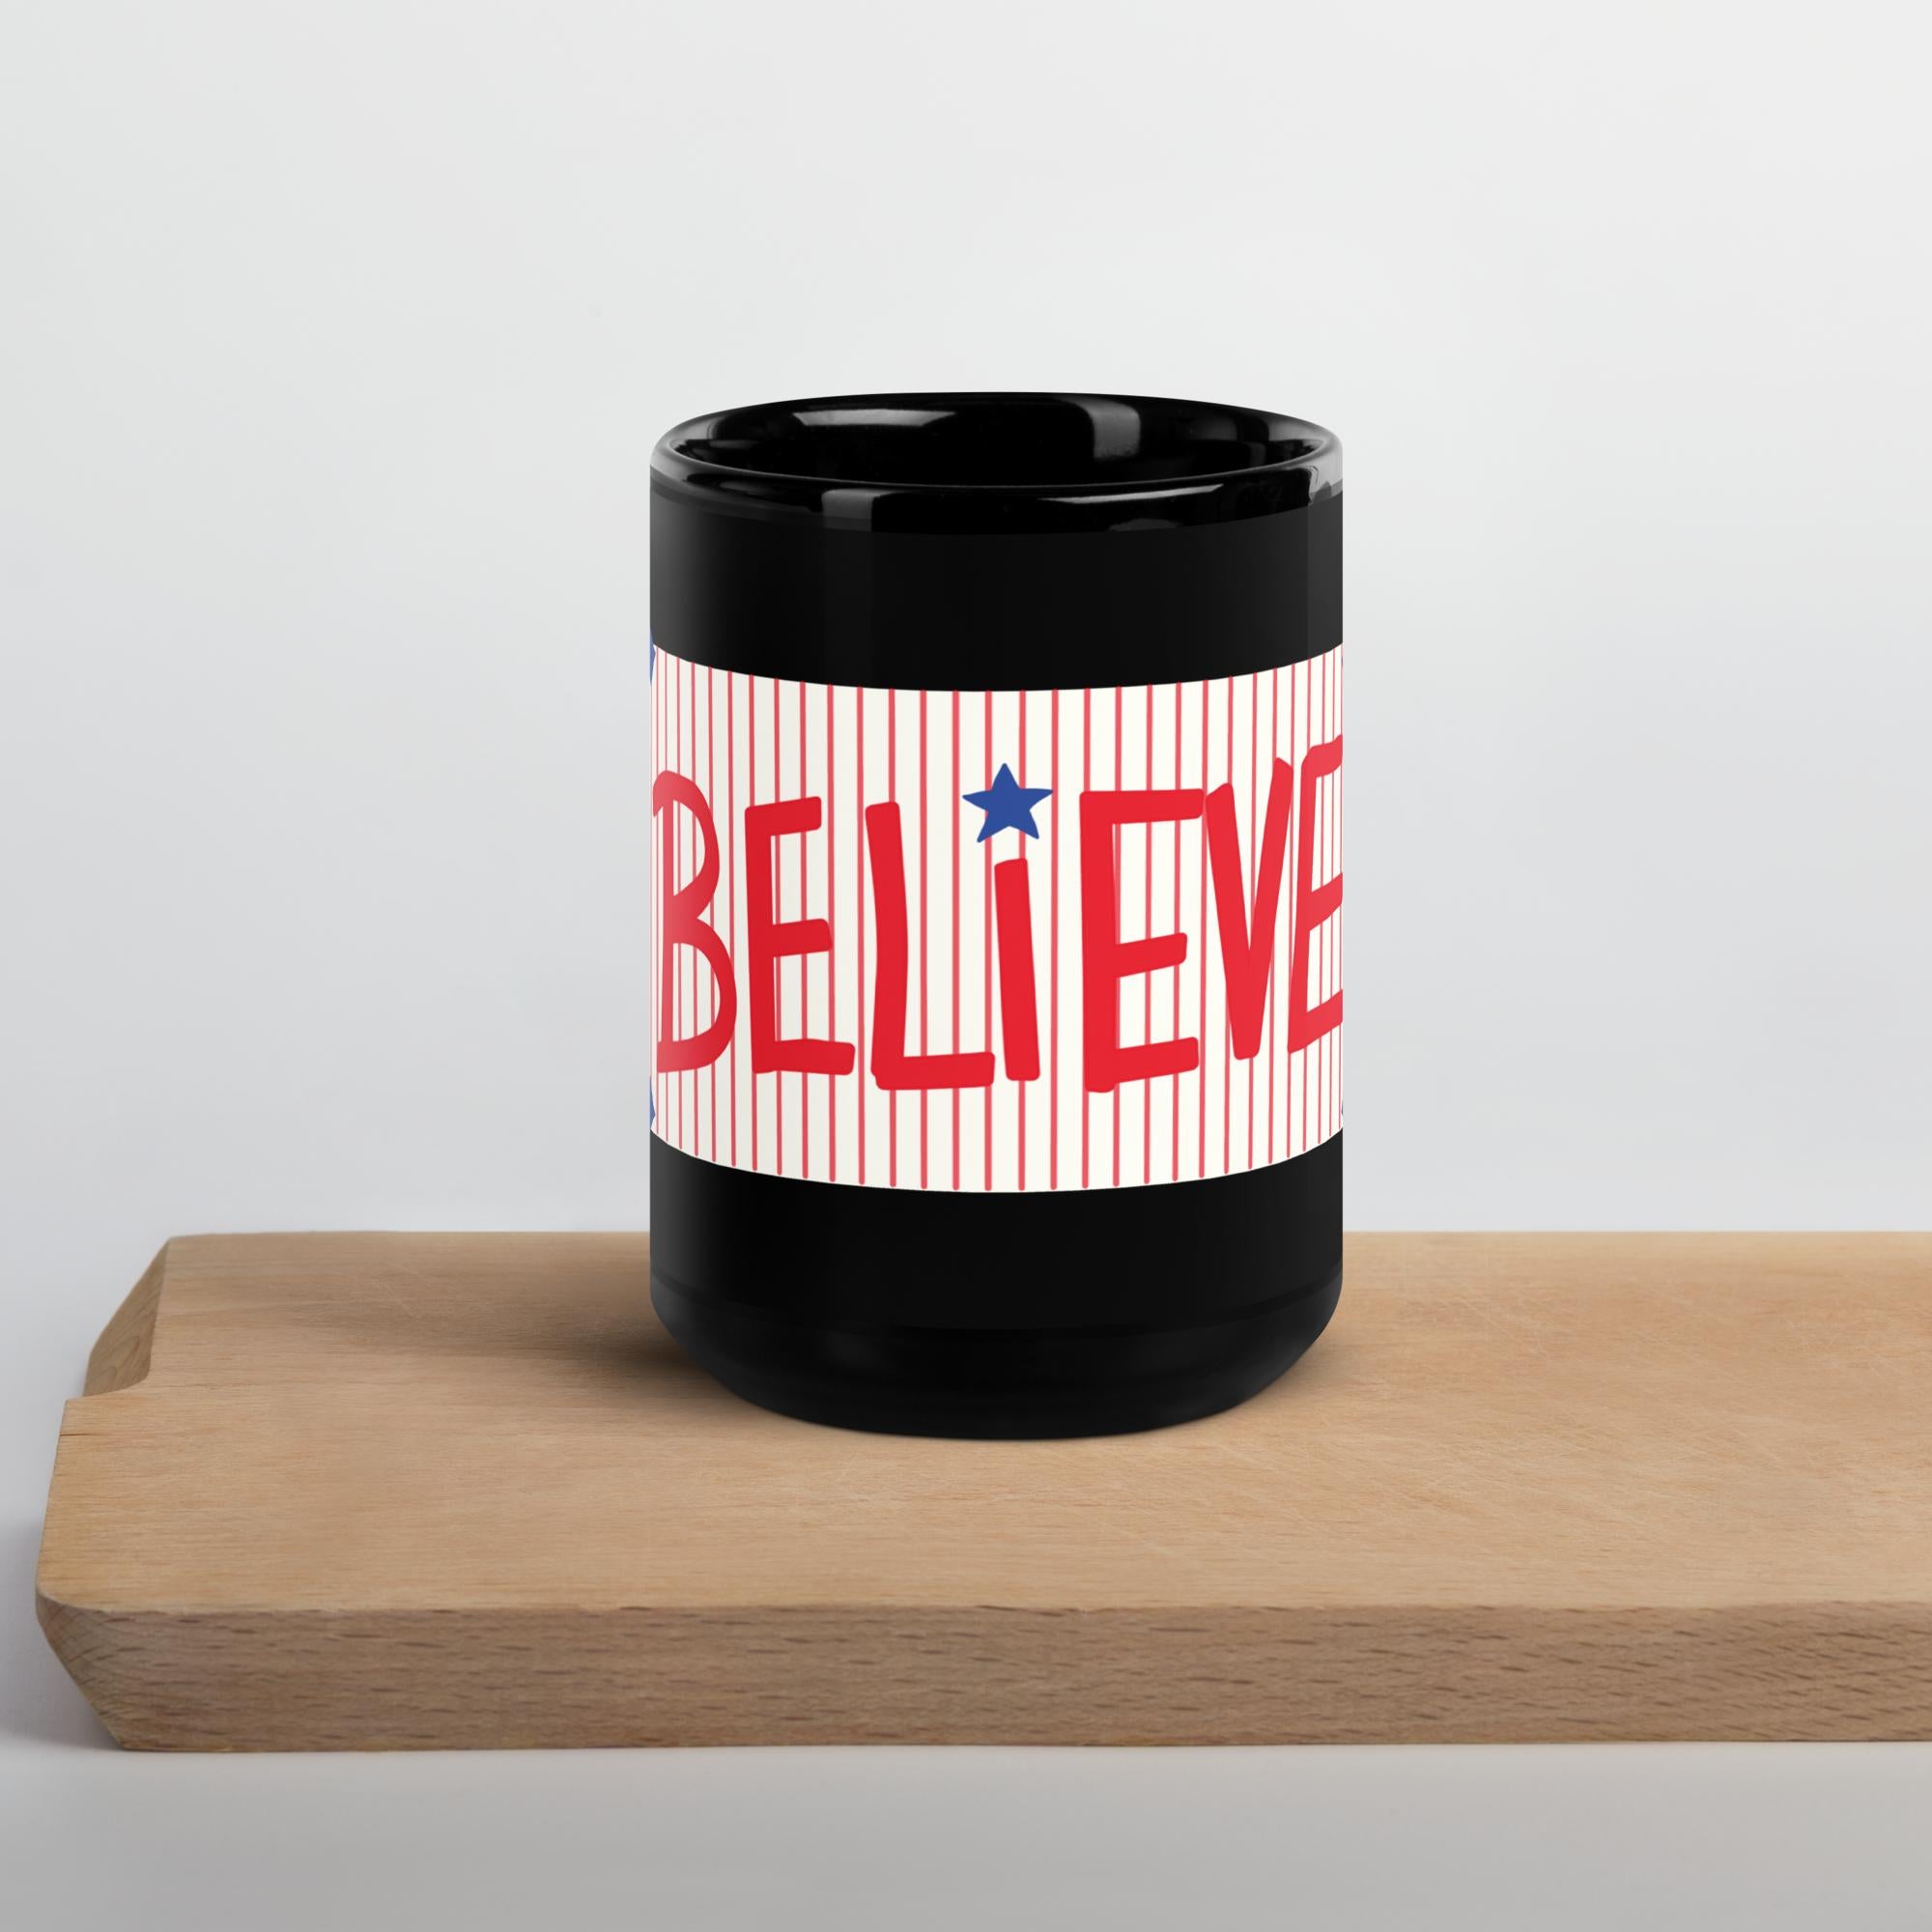 "Believe" Black Mug